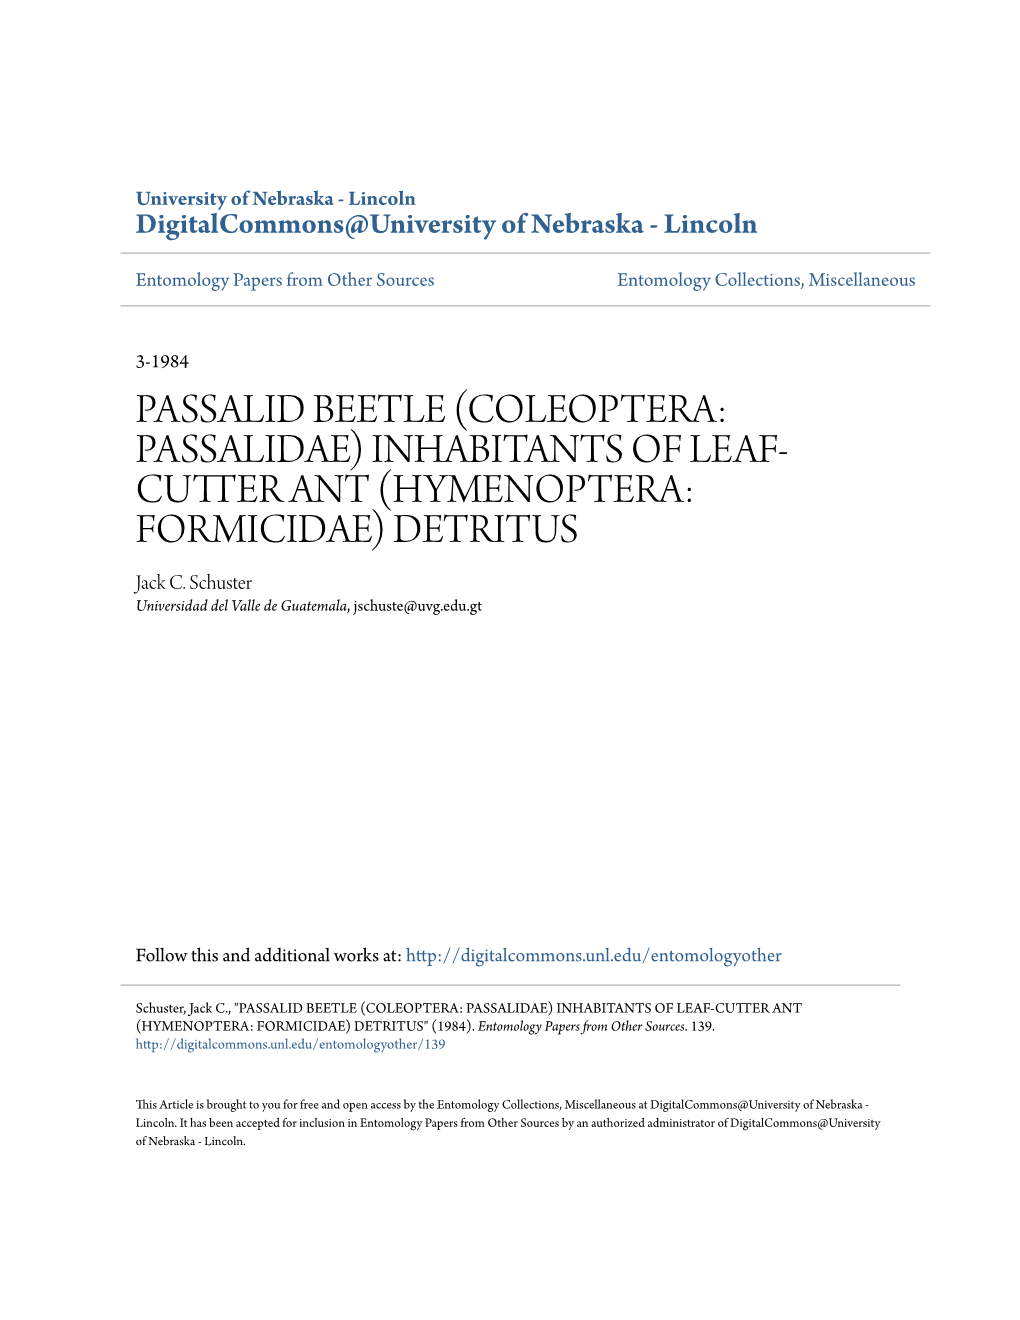 PASSALID BEETLE (COLEOPTERA: PASSALIDAE) INHABITANTS of LEAF- CUTTER ANT H( YMENOPTERA: FORMICIDAE) DETRITUS Jack C